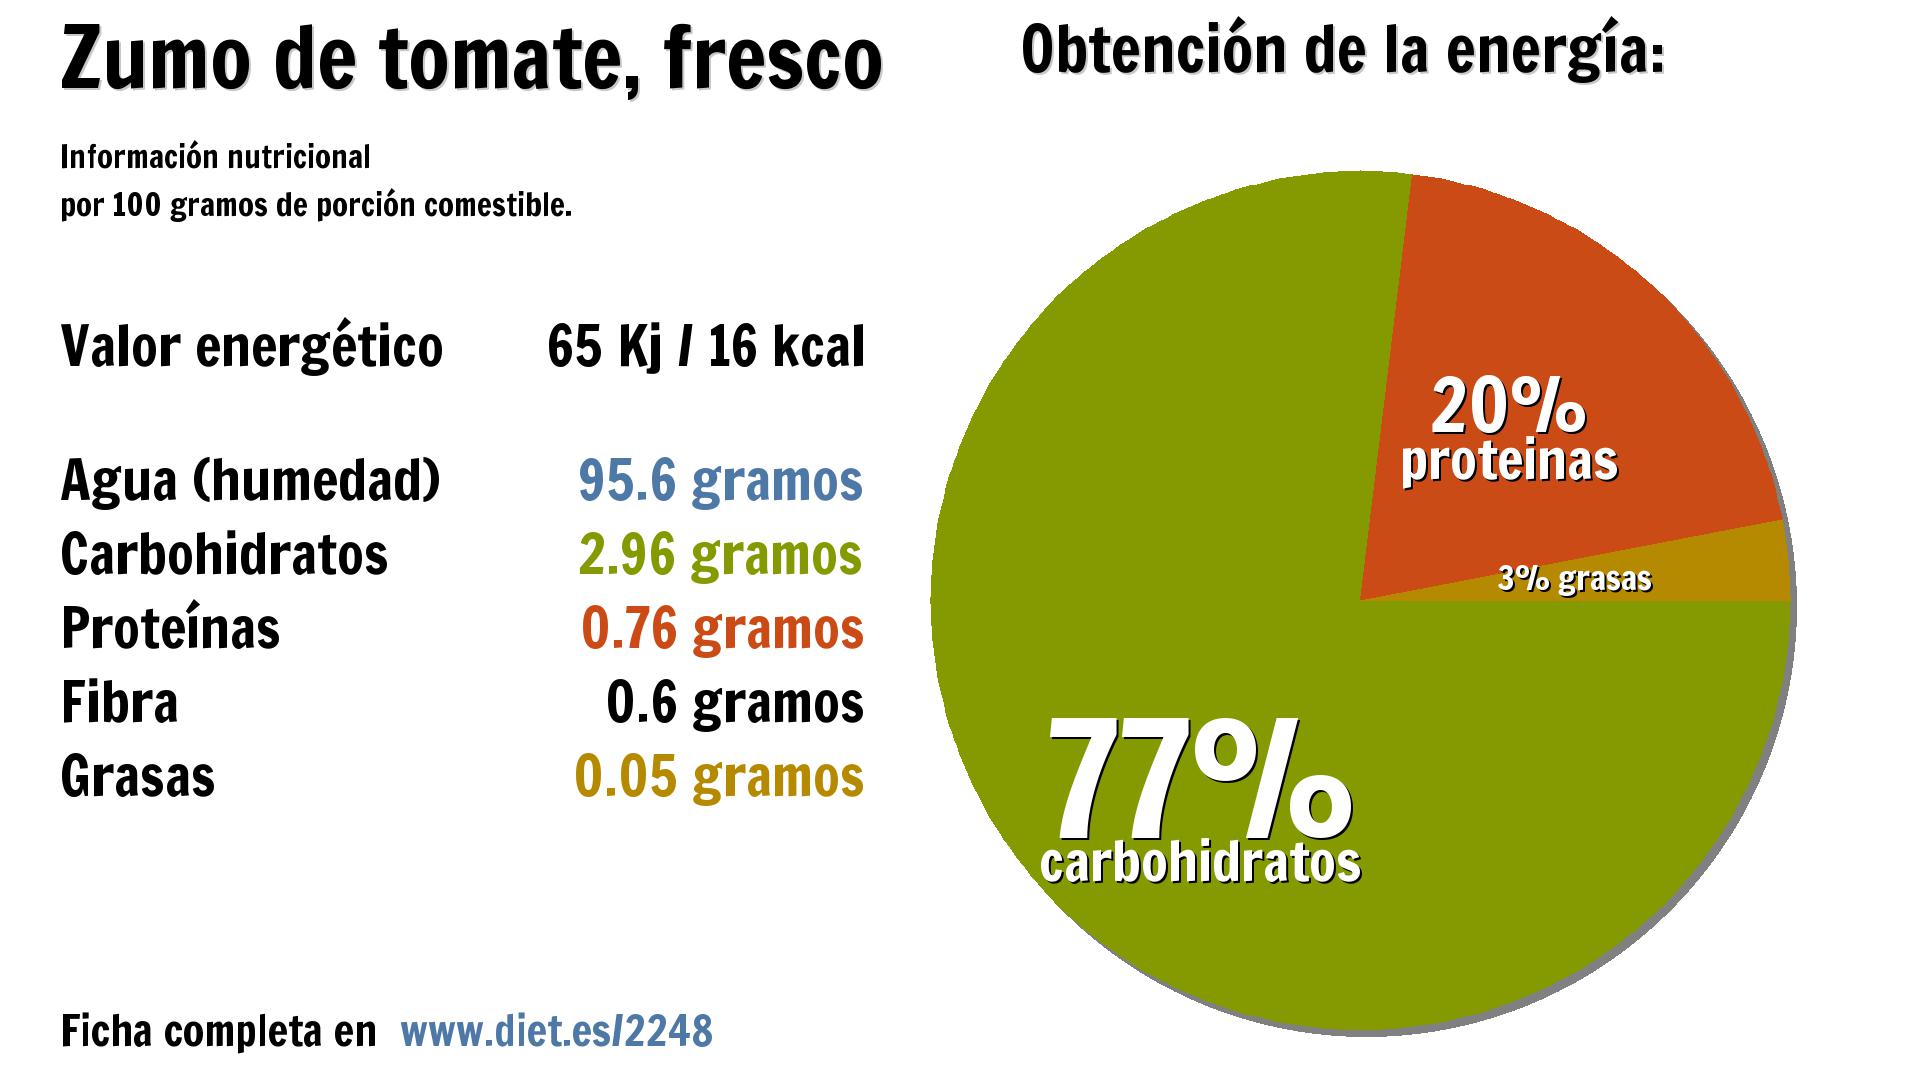 Zumo de tomate, fresco: agua 96 g., energía 65 Kj, carbohidratos 3 g., proteínas 1 g. y fibra 1 g.